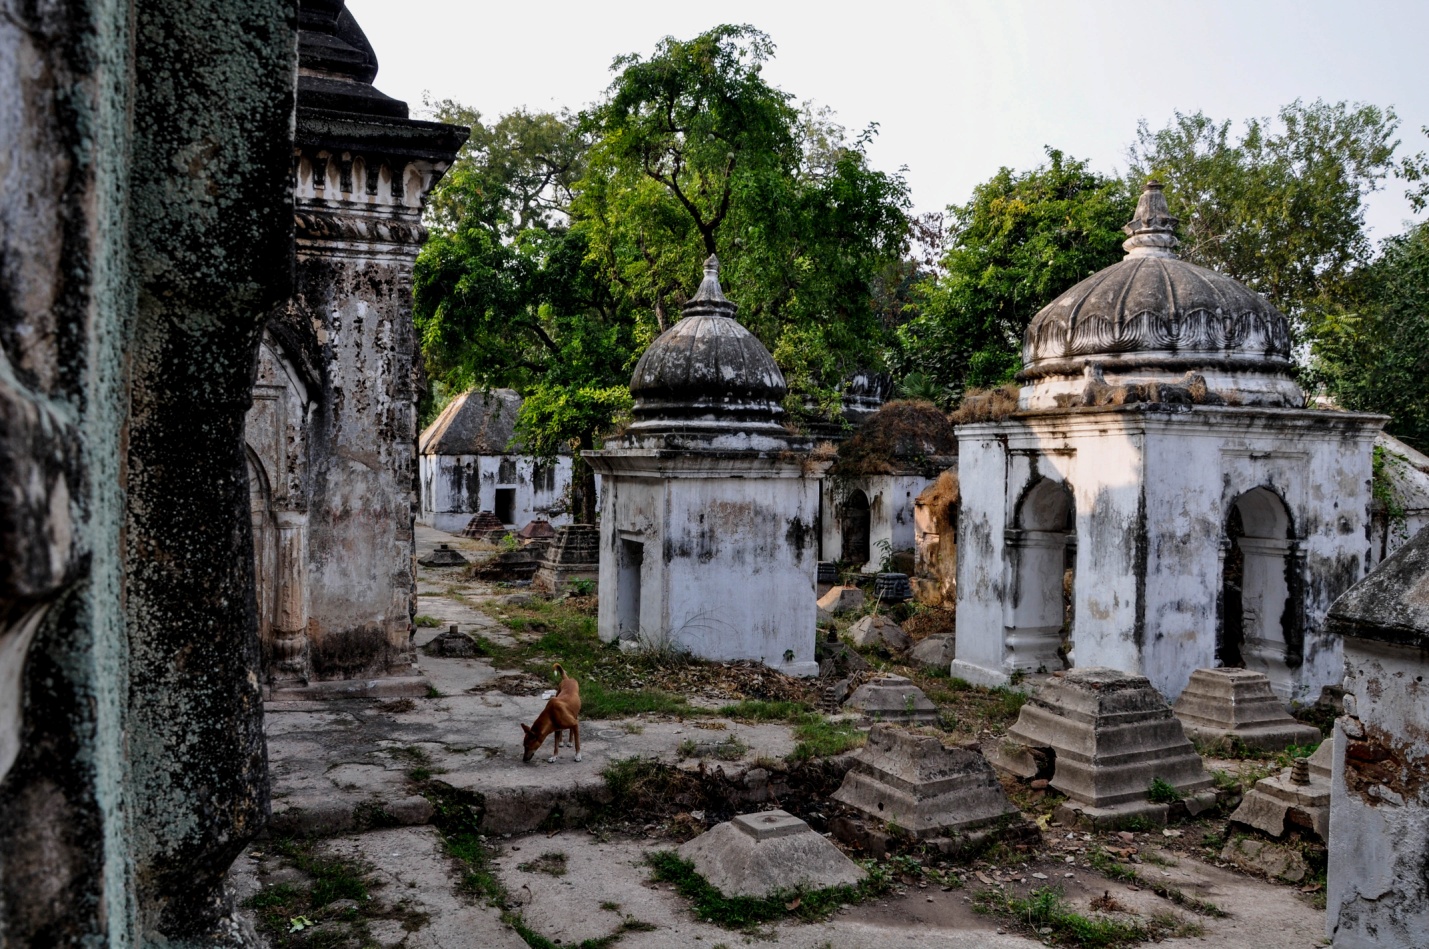 собака во дворе храма Маа-Багга-Деви-Сарасвати, Бодхгая, Индия